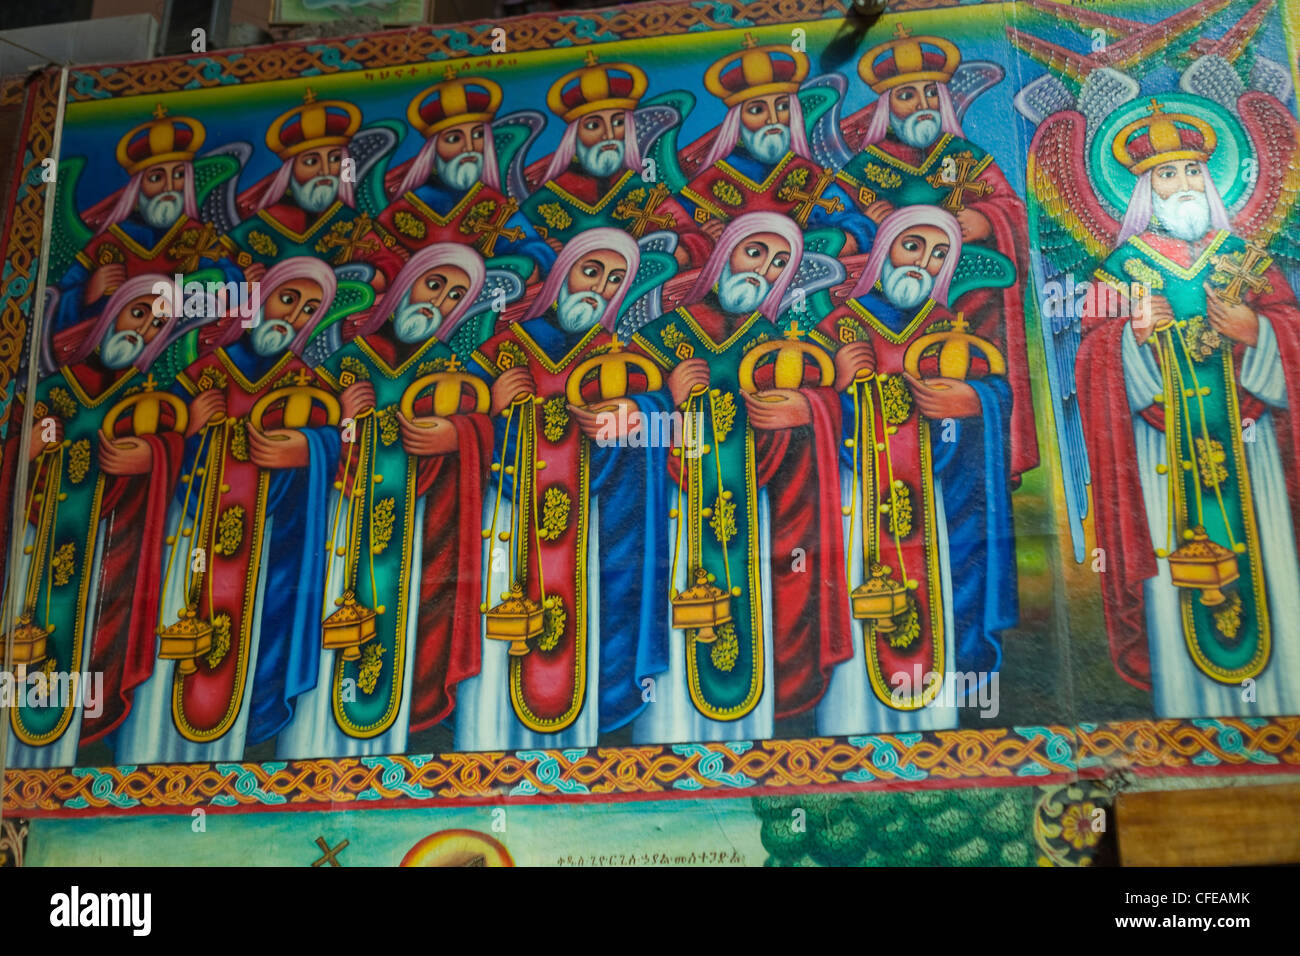 Debre Libanos. Monastero. Chiesa Ortodossa. Etiopia. Murale di Afewerk Tekle, artista etiope, raffiguranti gli apostoli, desciples. Foto Stock